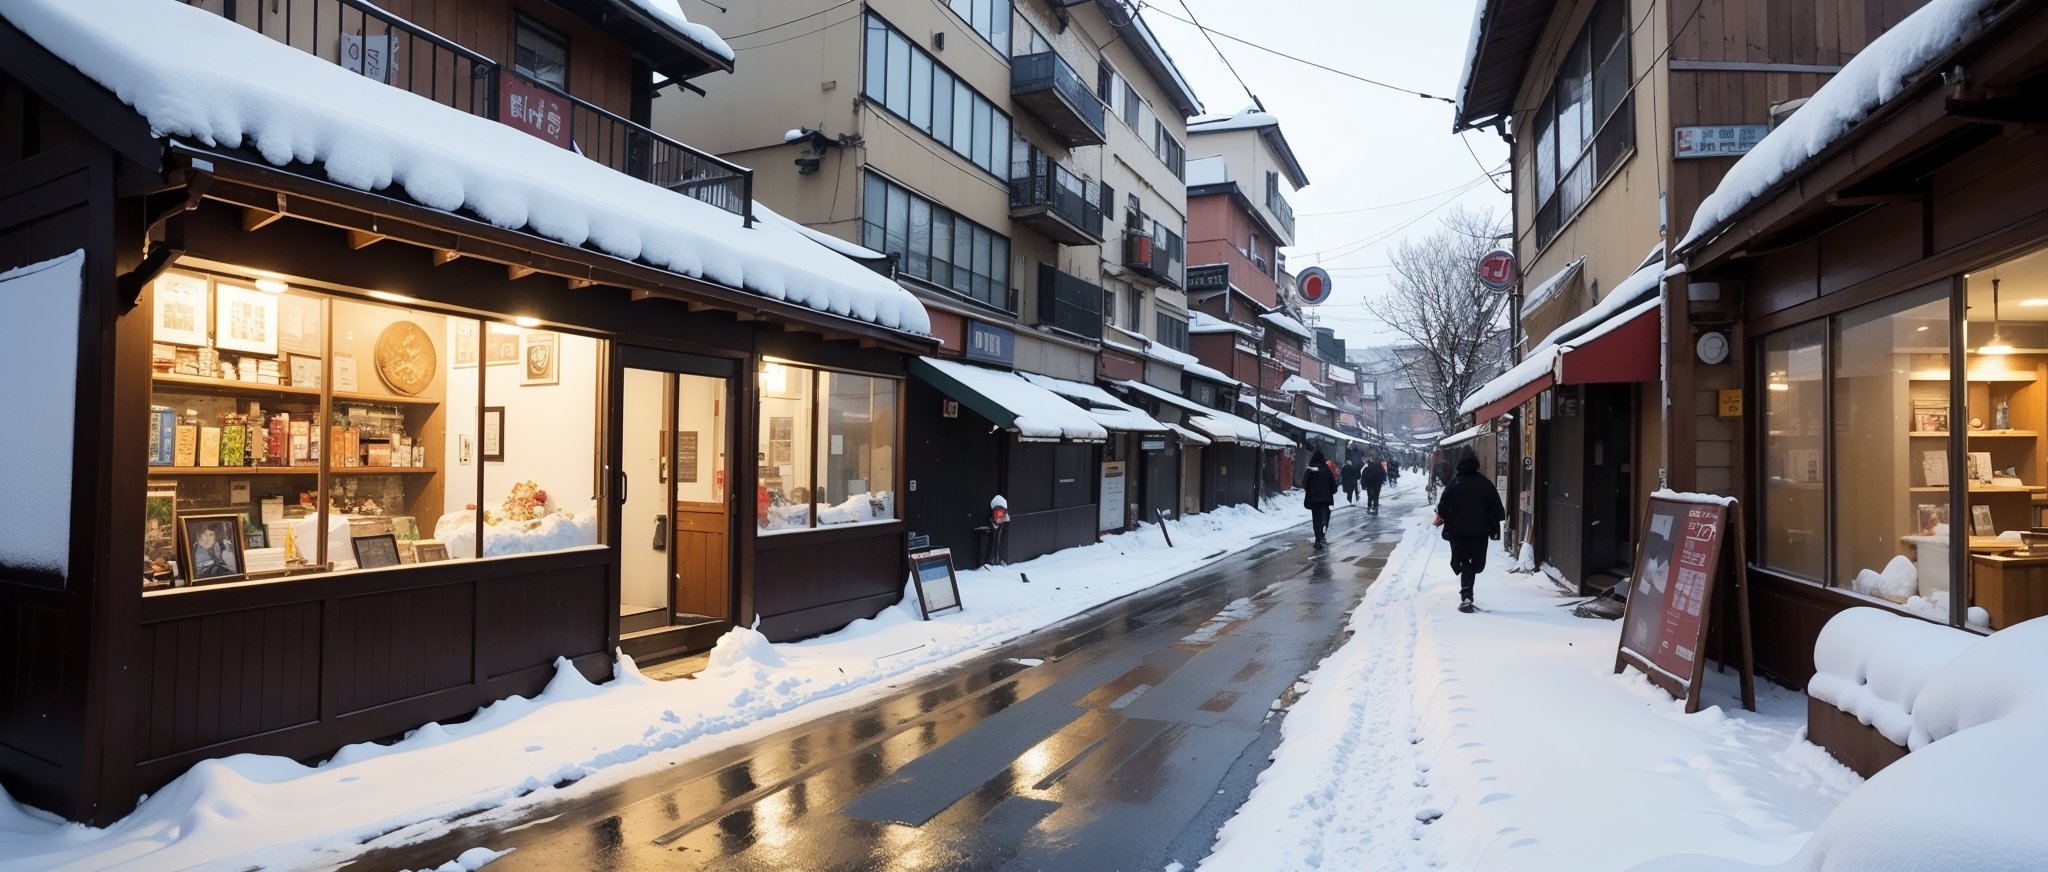 masterpiece, high detailed, photo-realistic,
taiwan taipei city snowy street,